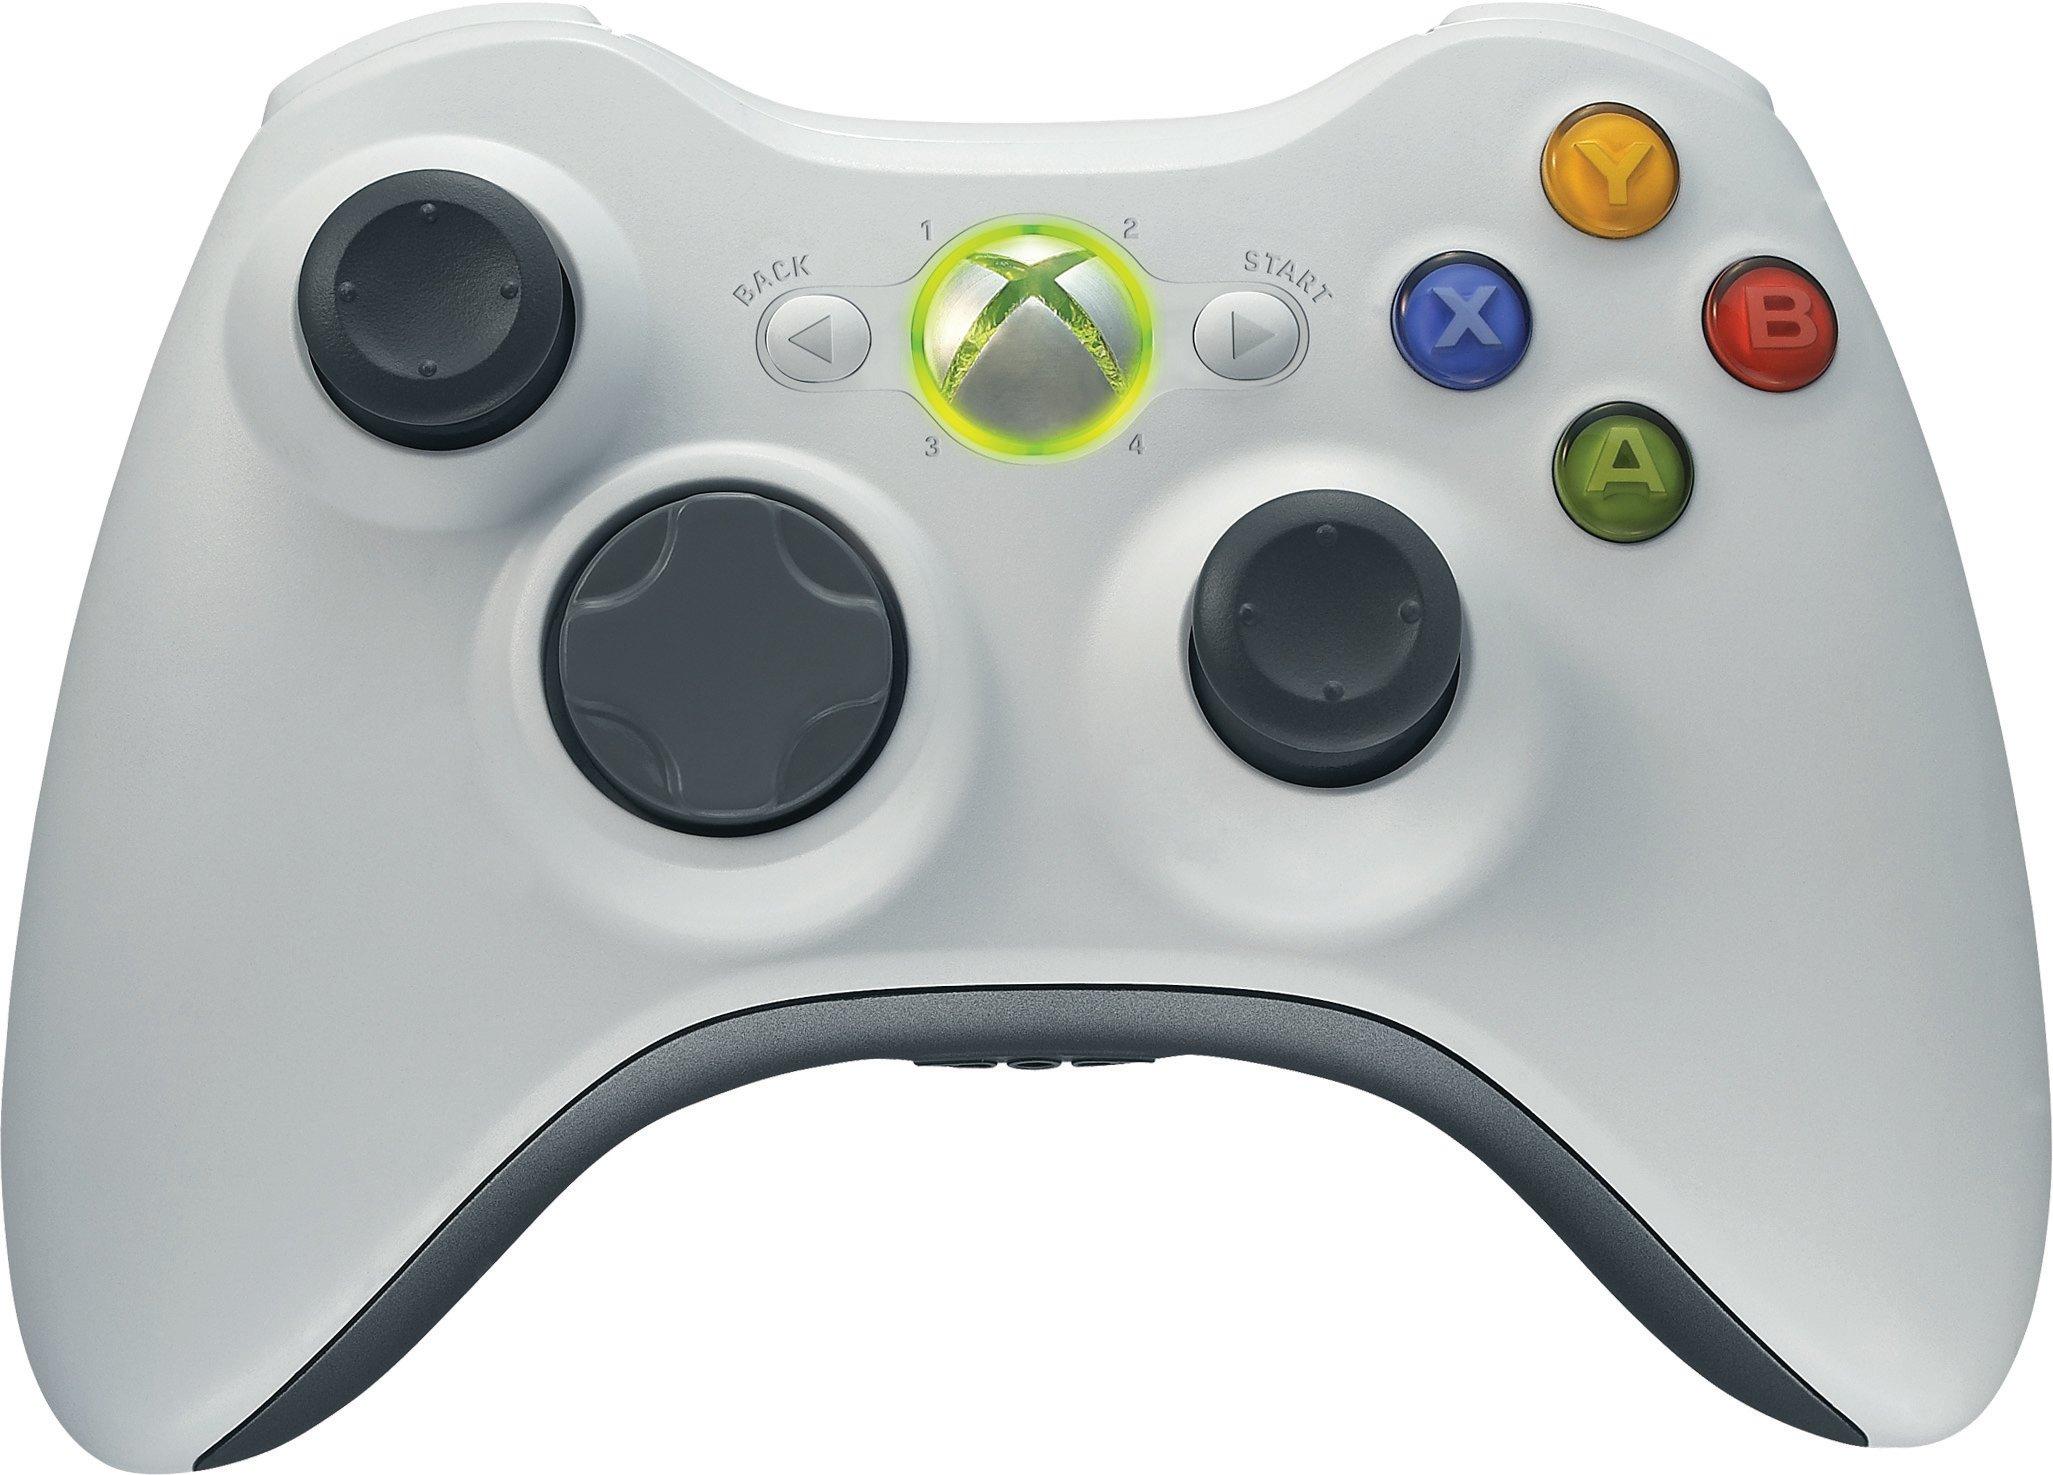 Microsoft Xbox 360 Wireless Controller review: Microsoft Xbox 360